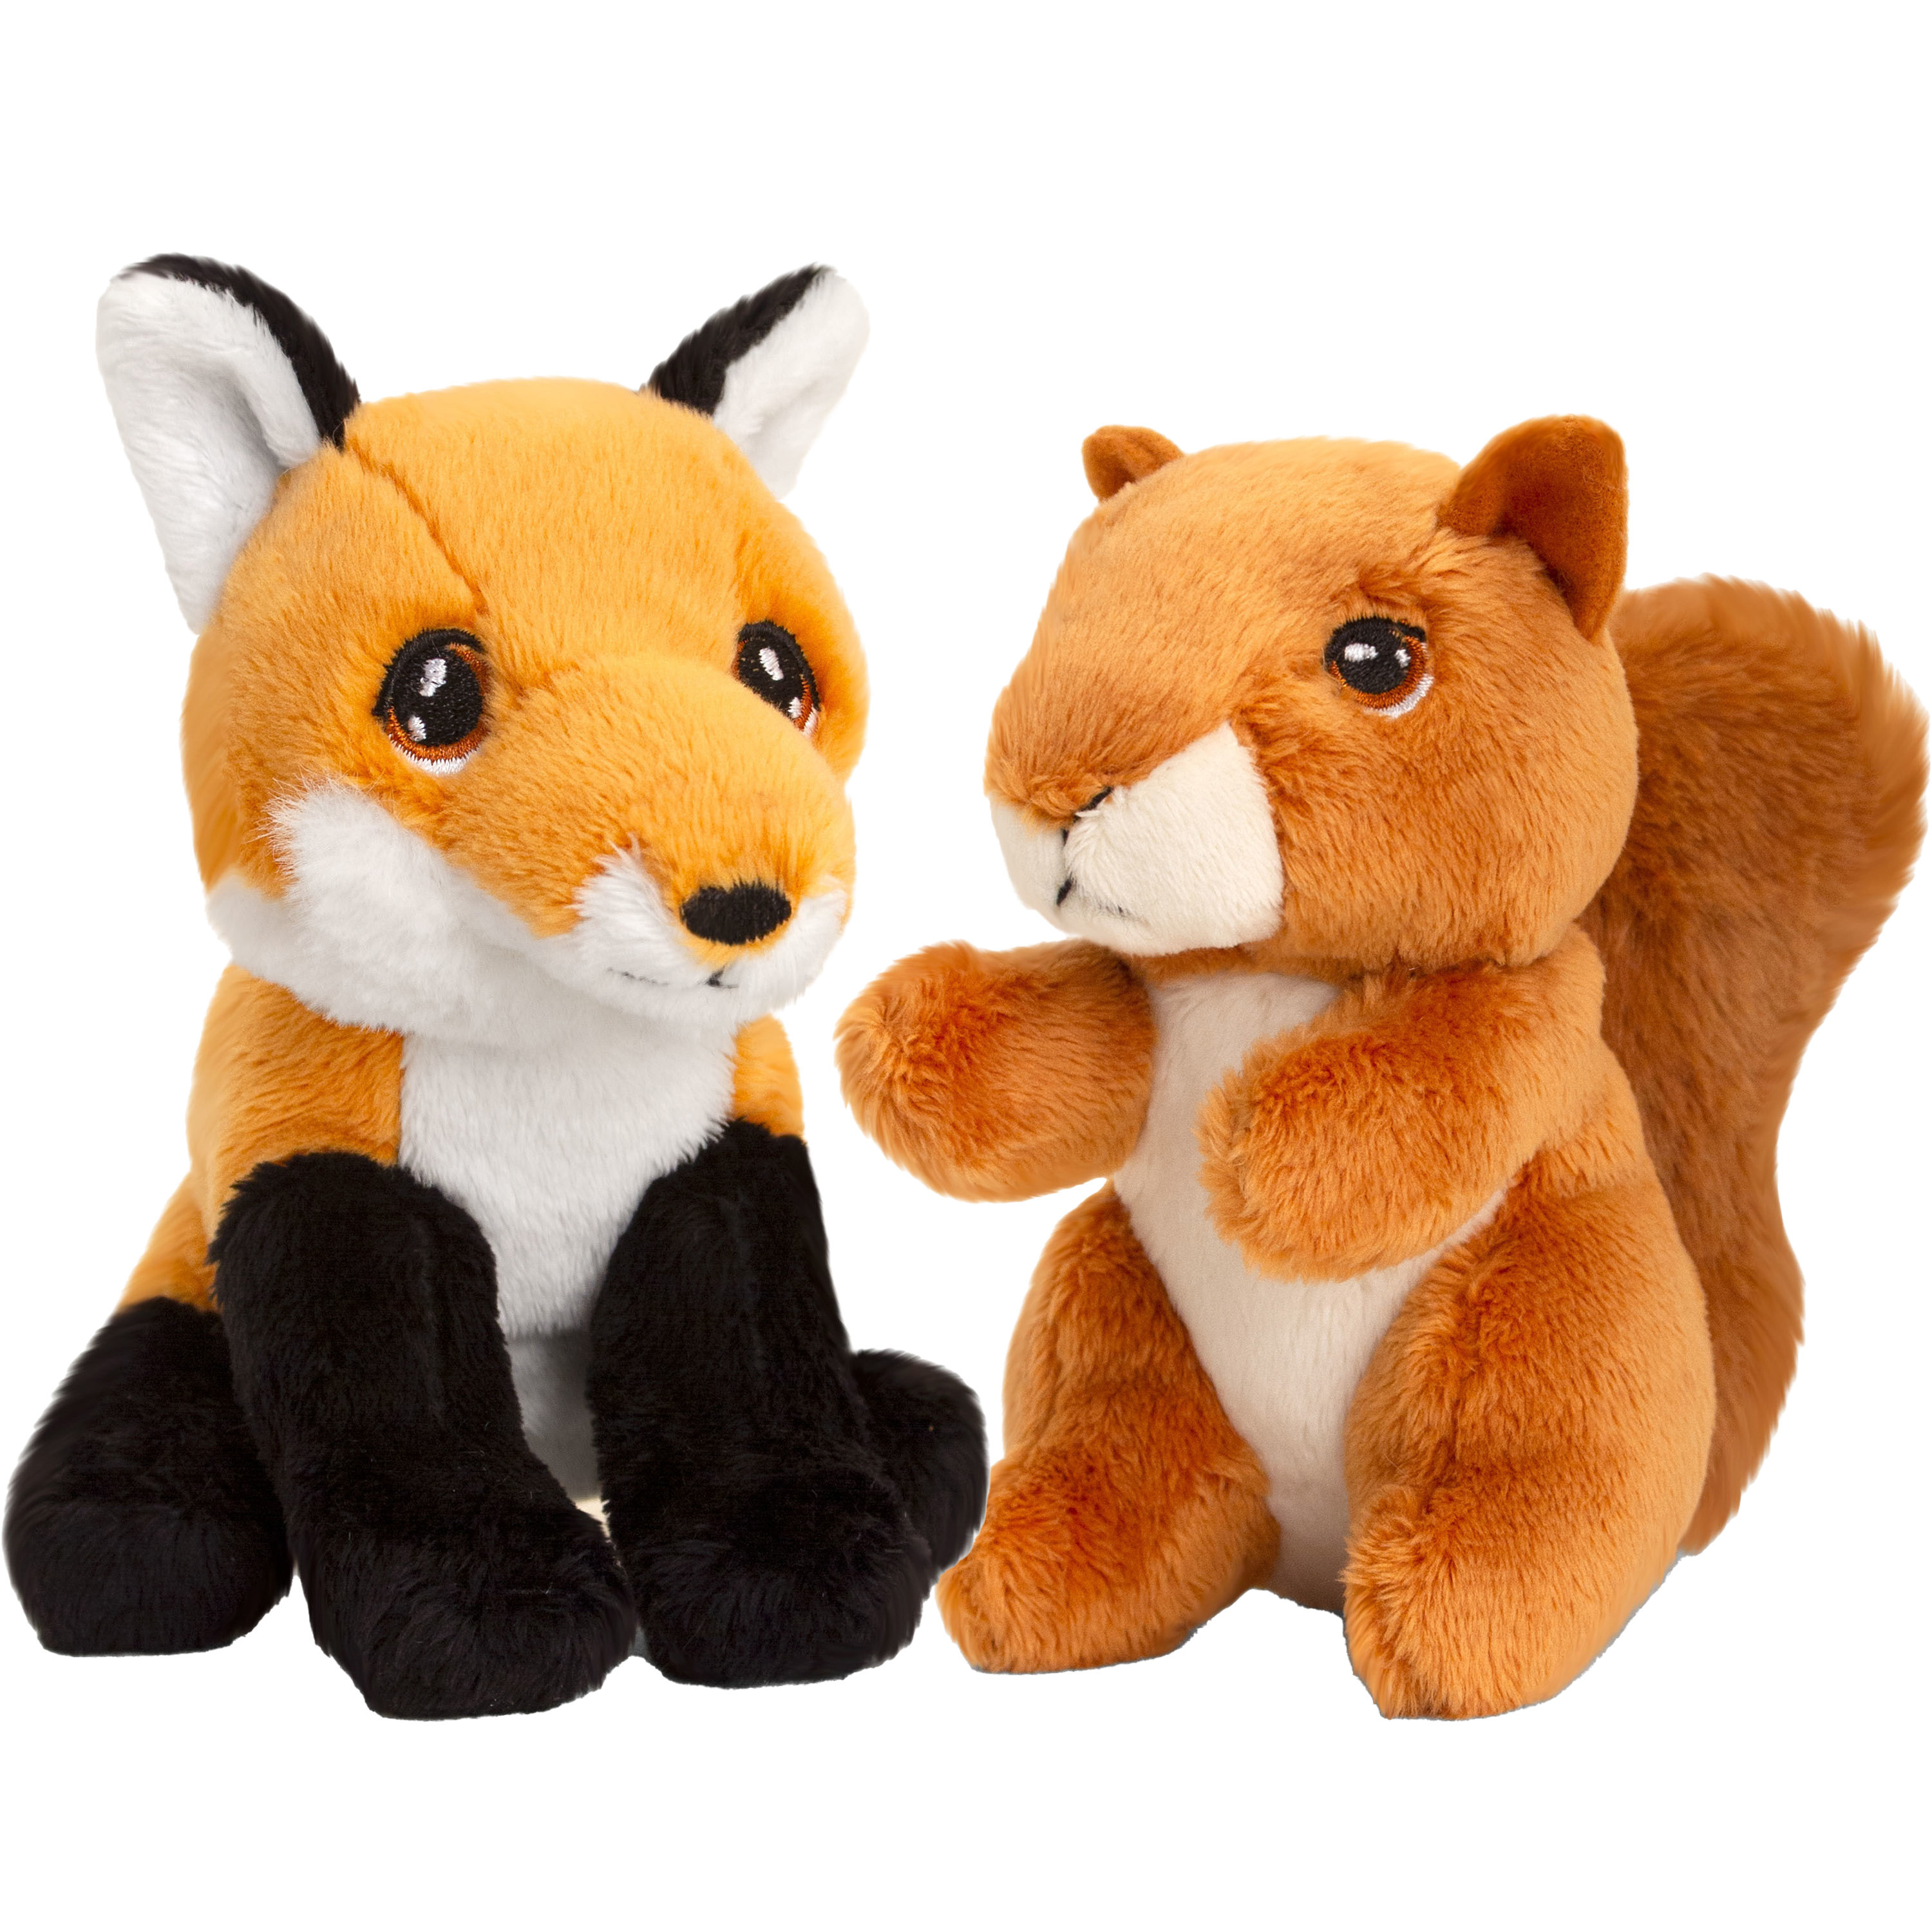 Keel Toys Pluche knuffels rode vos en eekhoorn bosdieren vriendjes 12 cm -